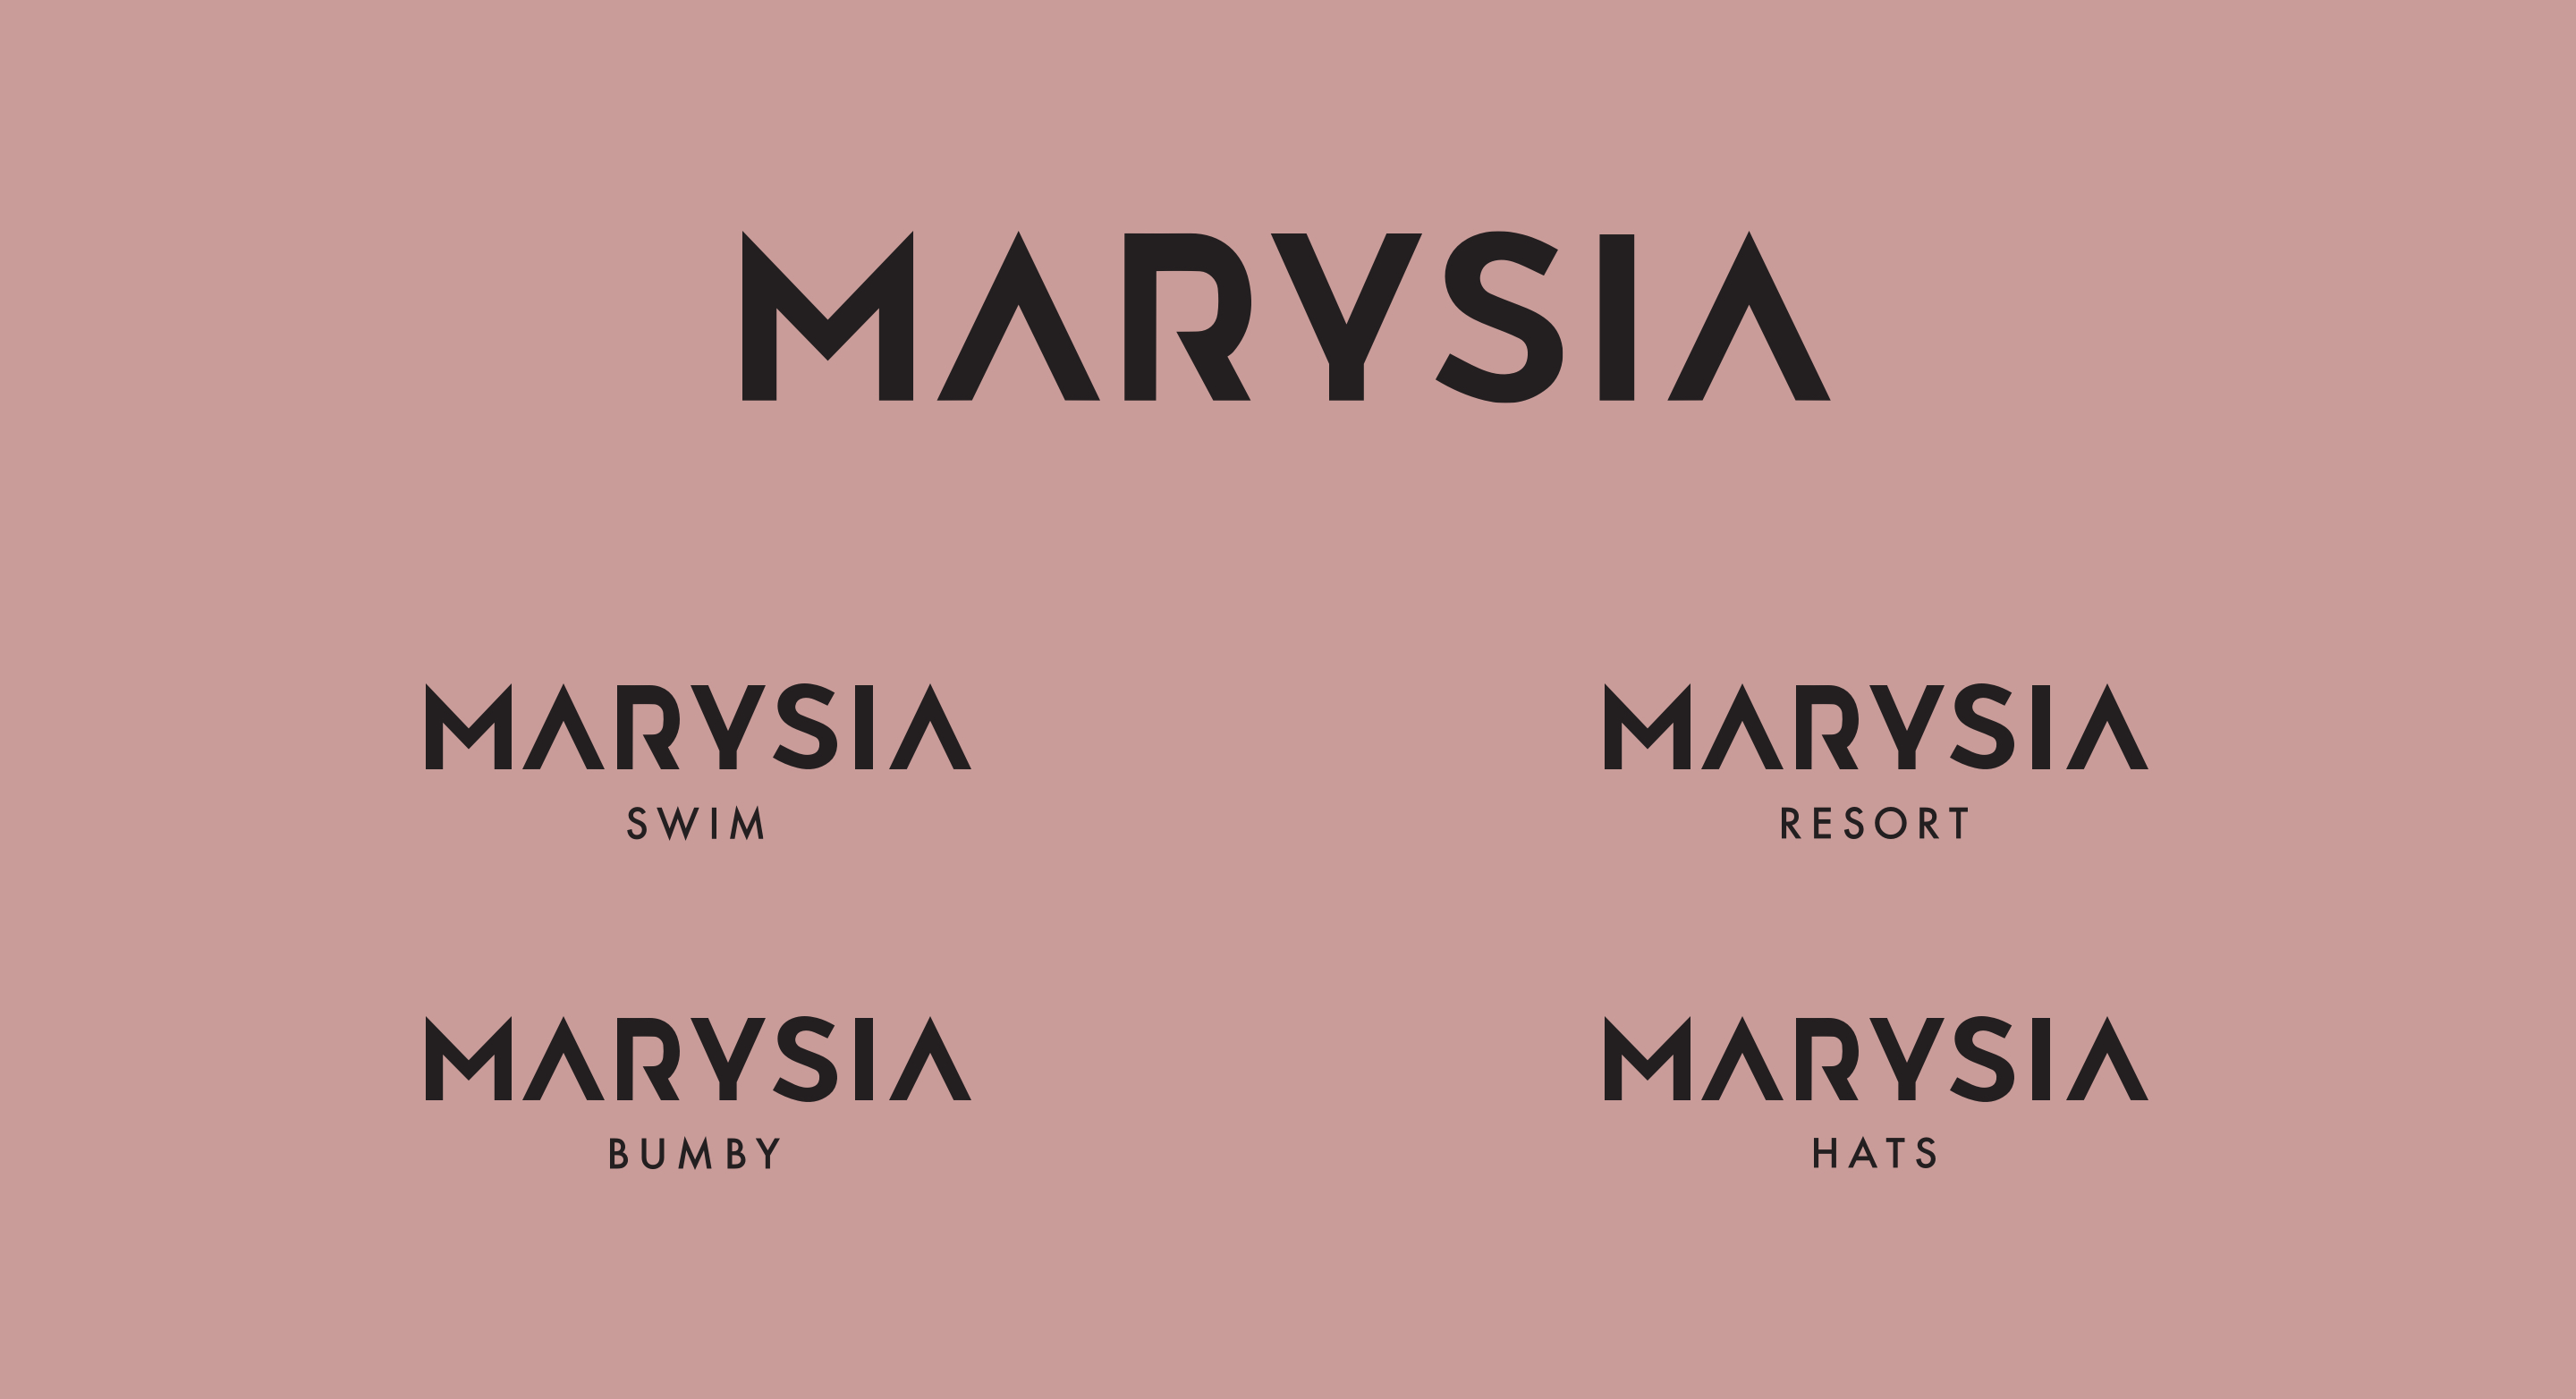 Marysia logo